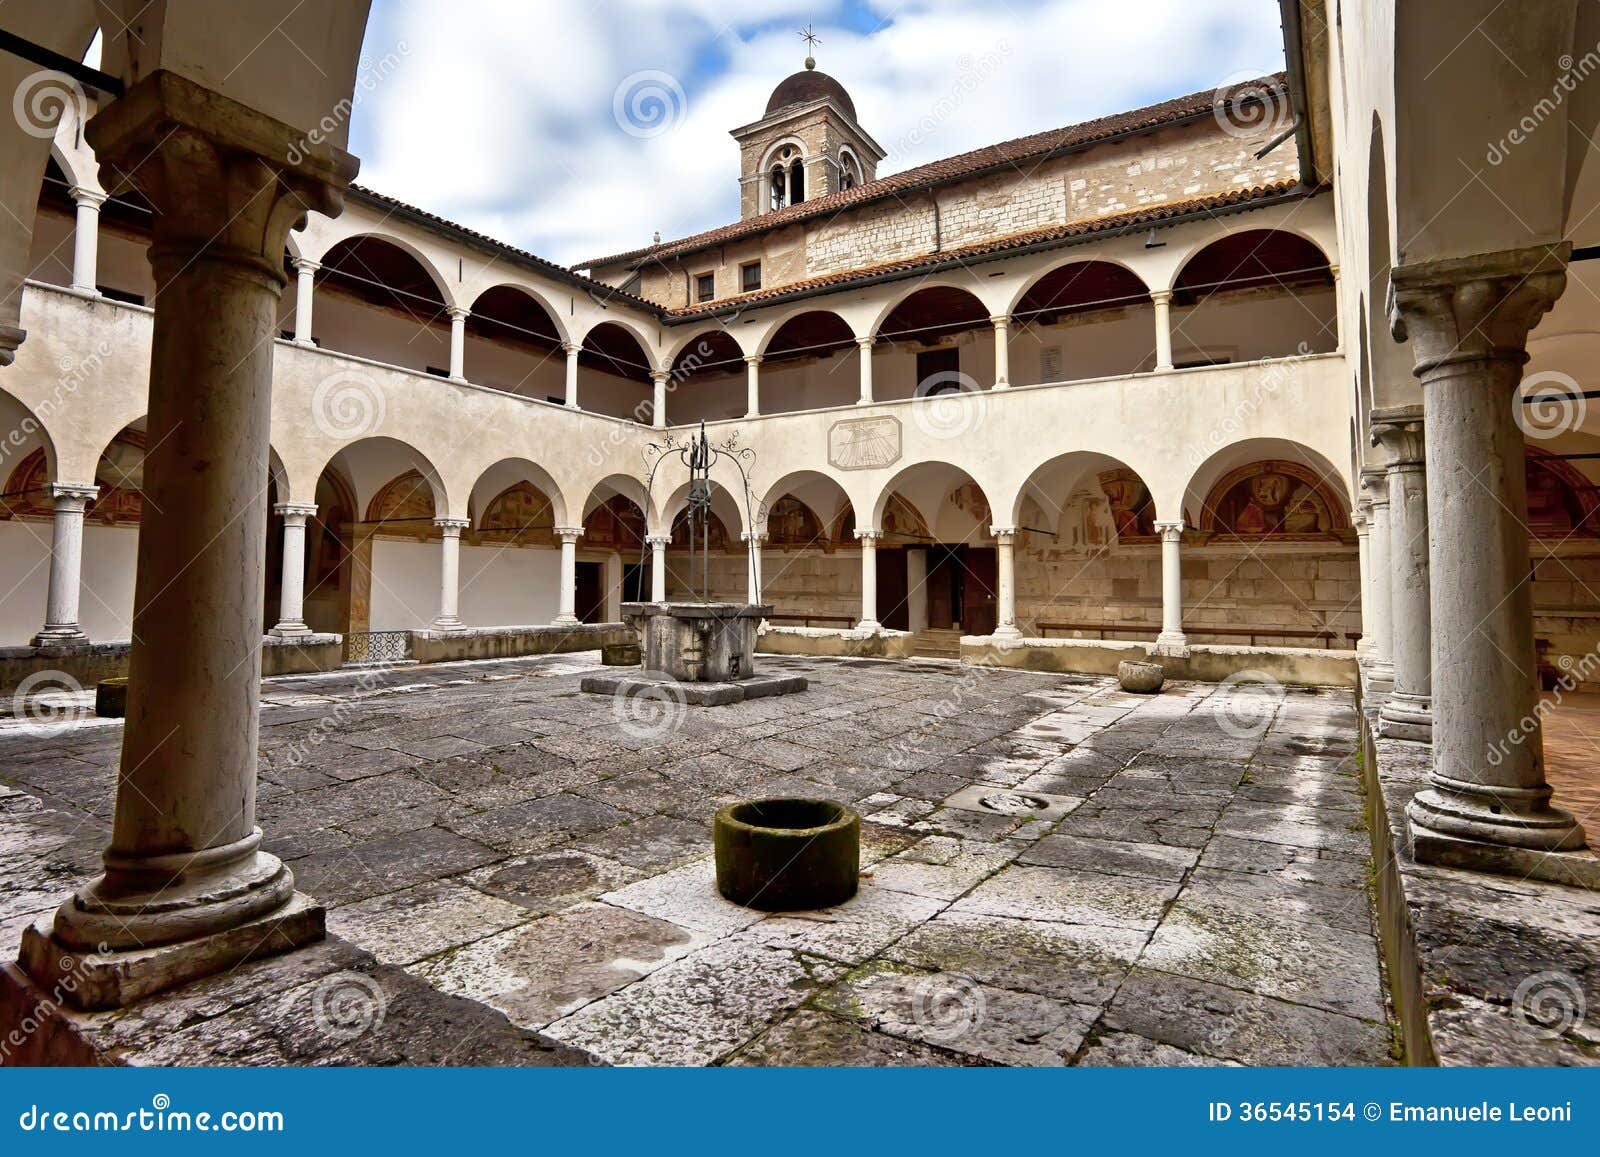 monastery, sanctuary saint vittore and saint corona near anzu, feltre, belluno